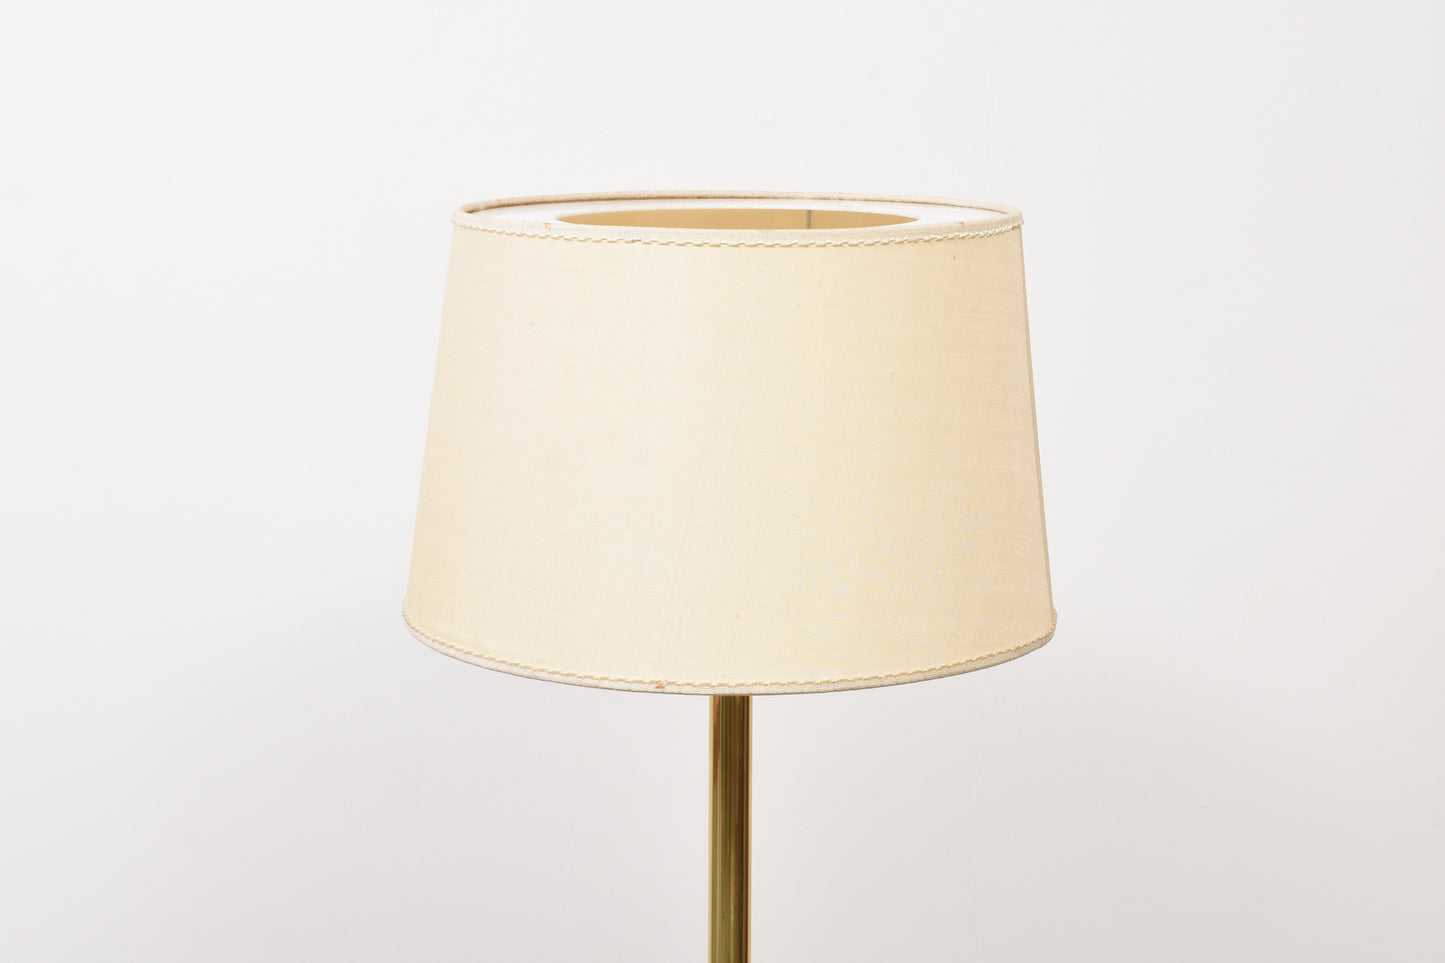 1960s brass floor lamp by Ateljé Lyktan